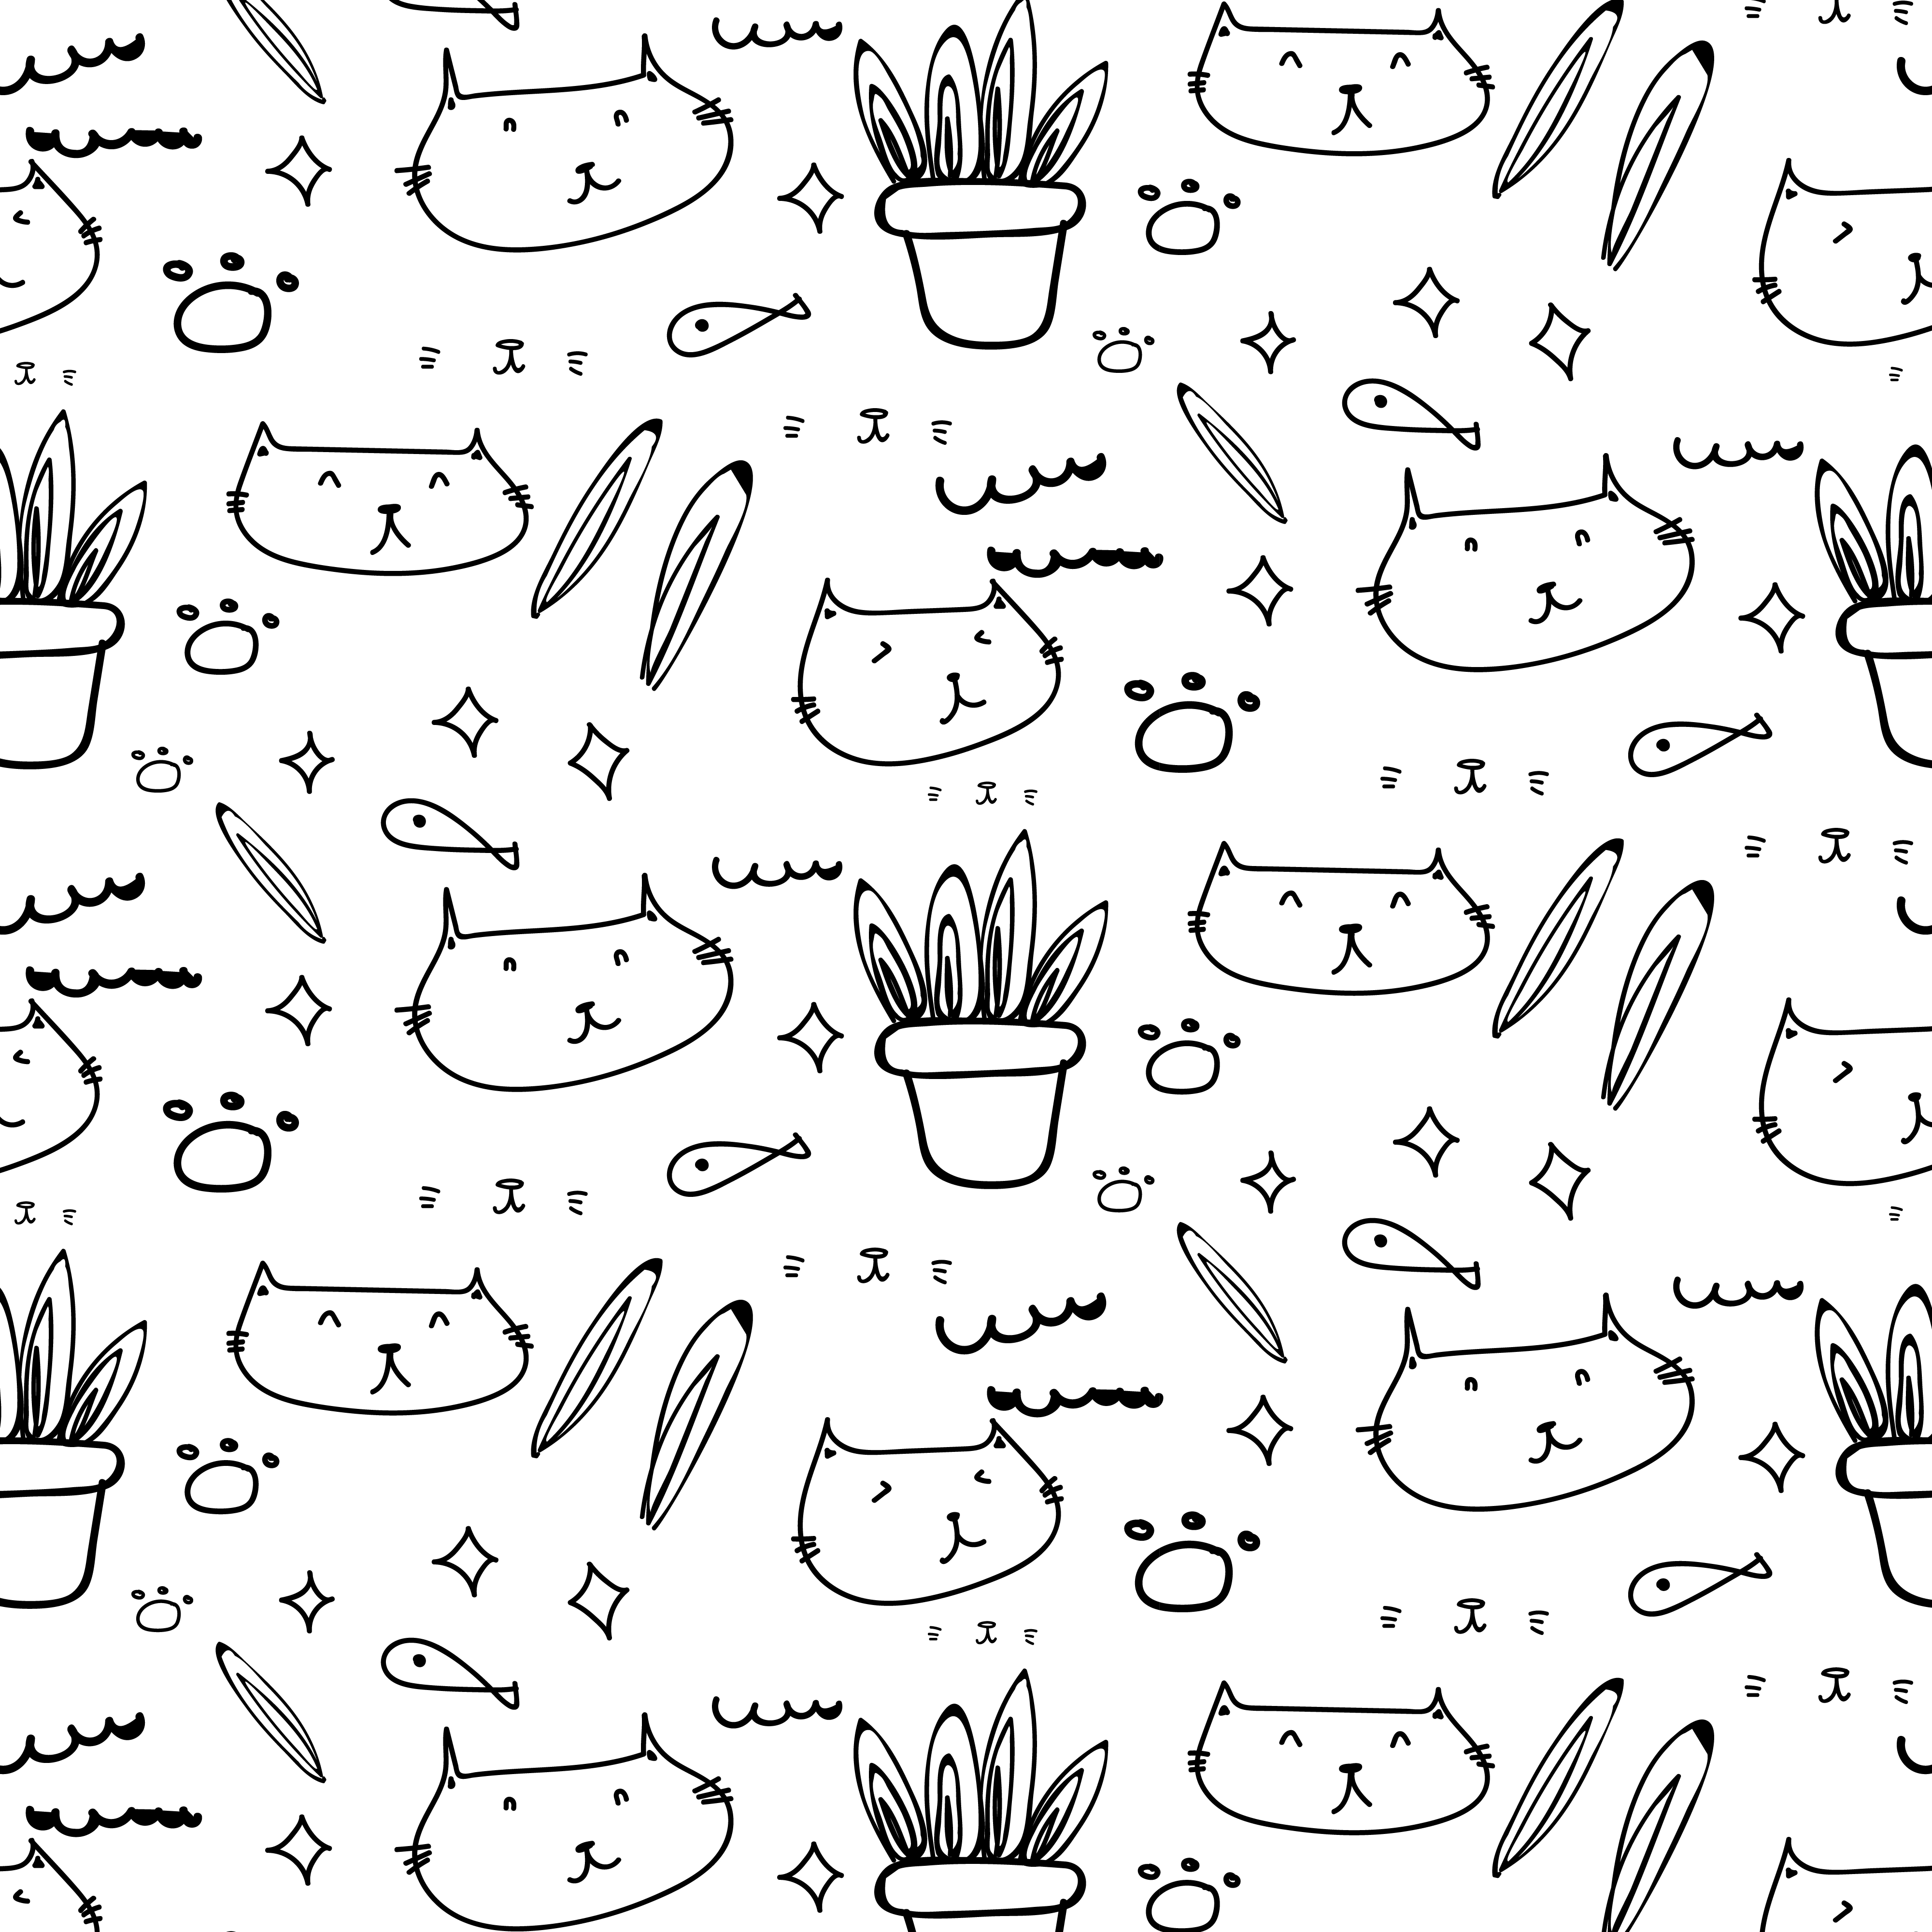 Cute cat doodle pattern background. 614010 Vector Art at Vecteezy